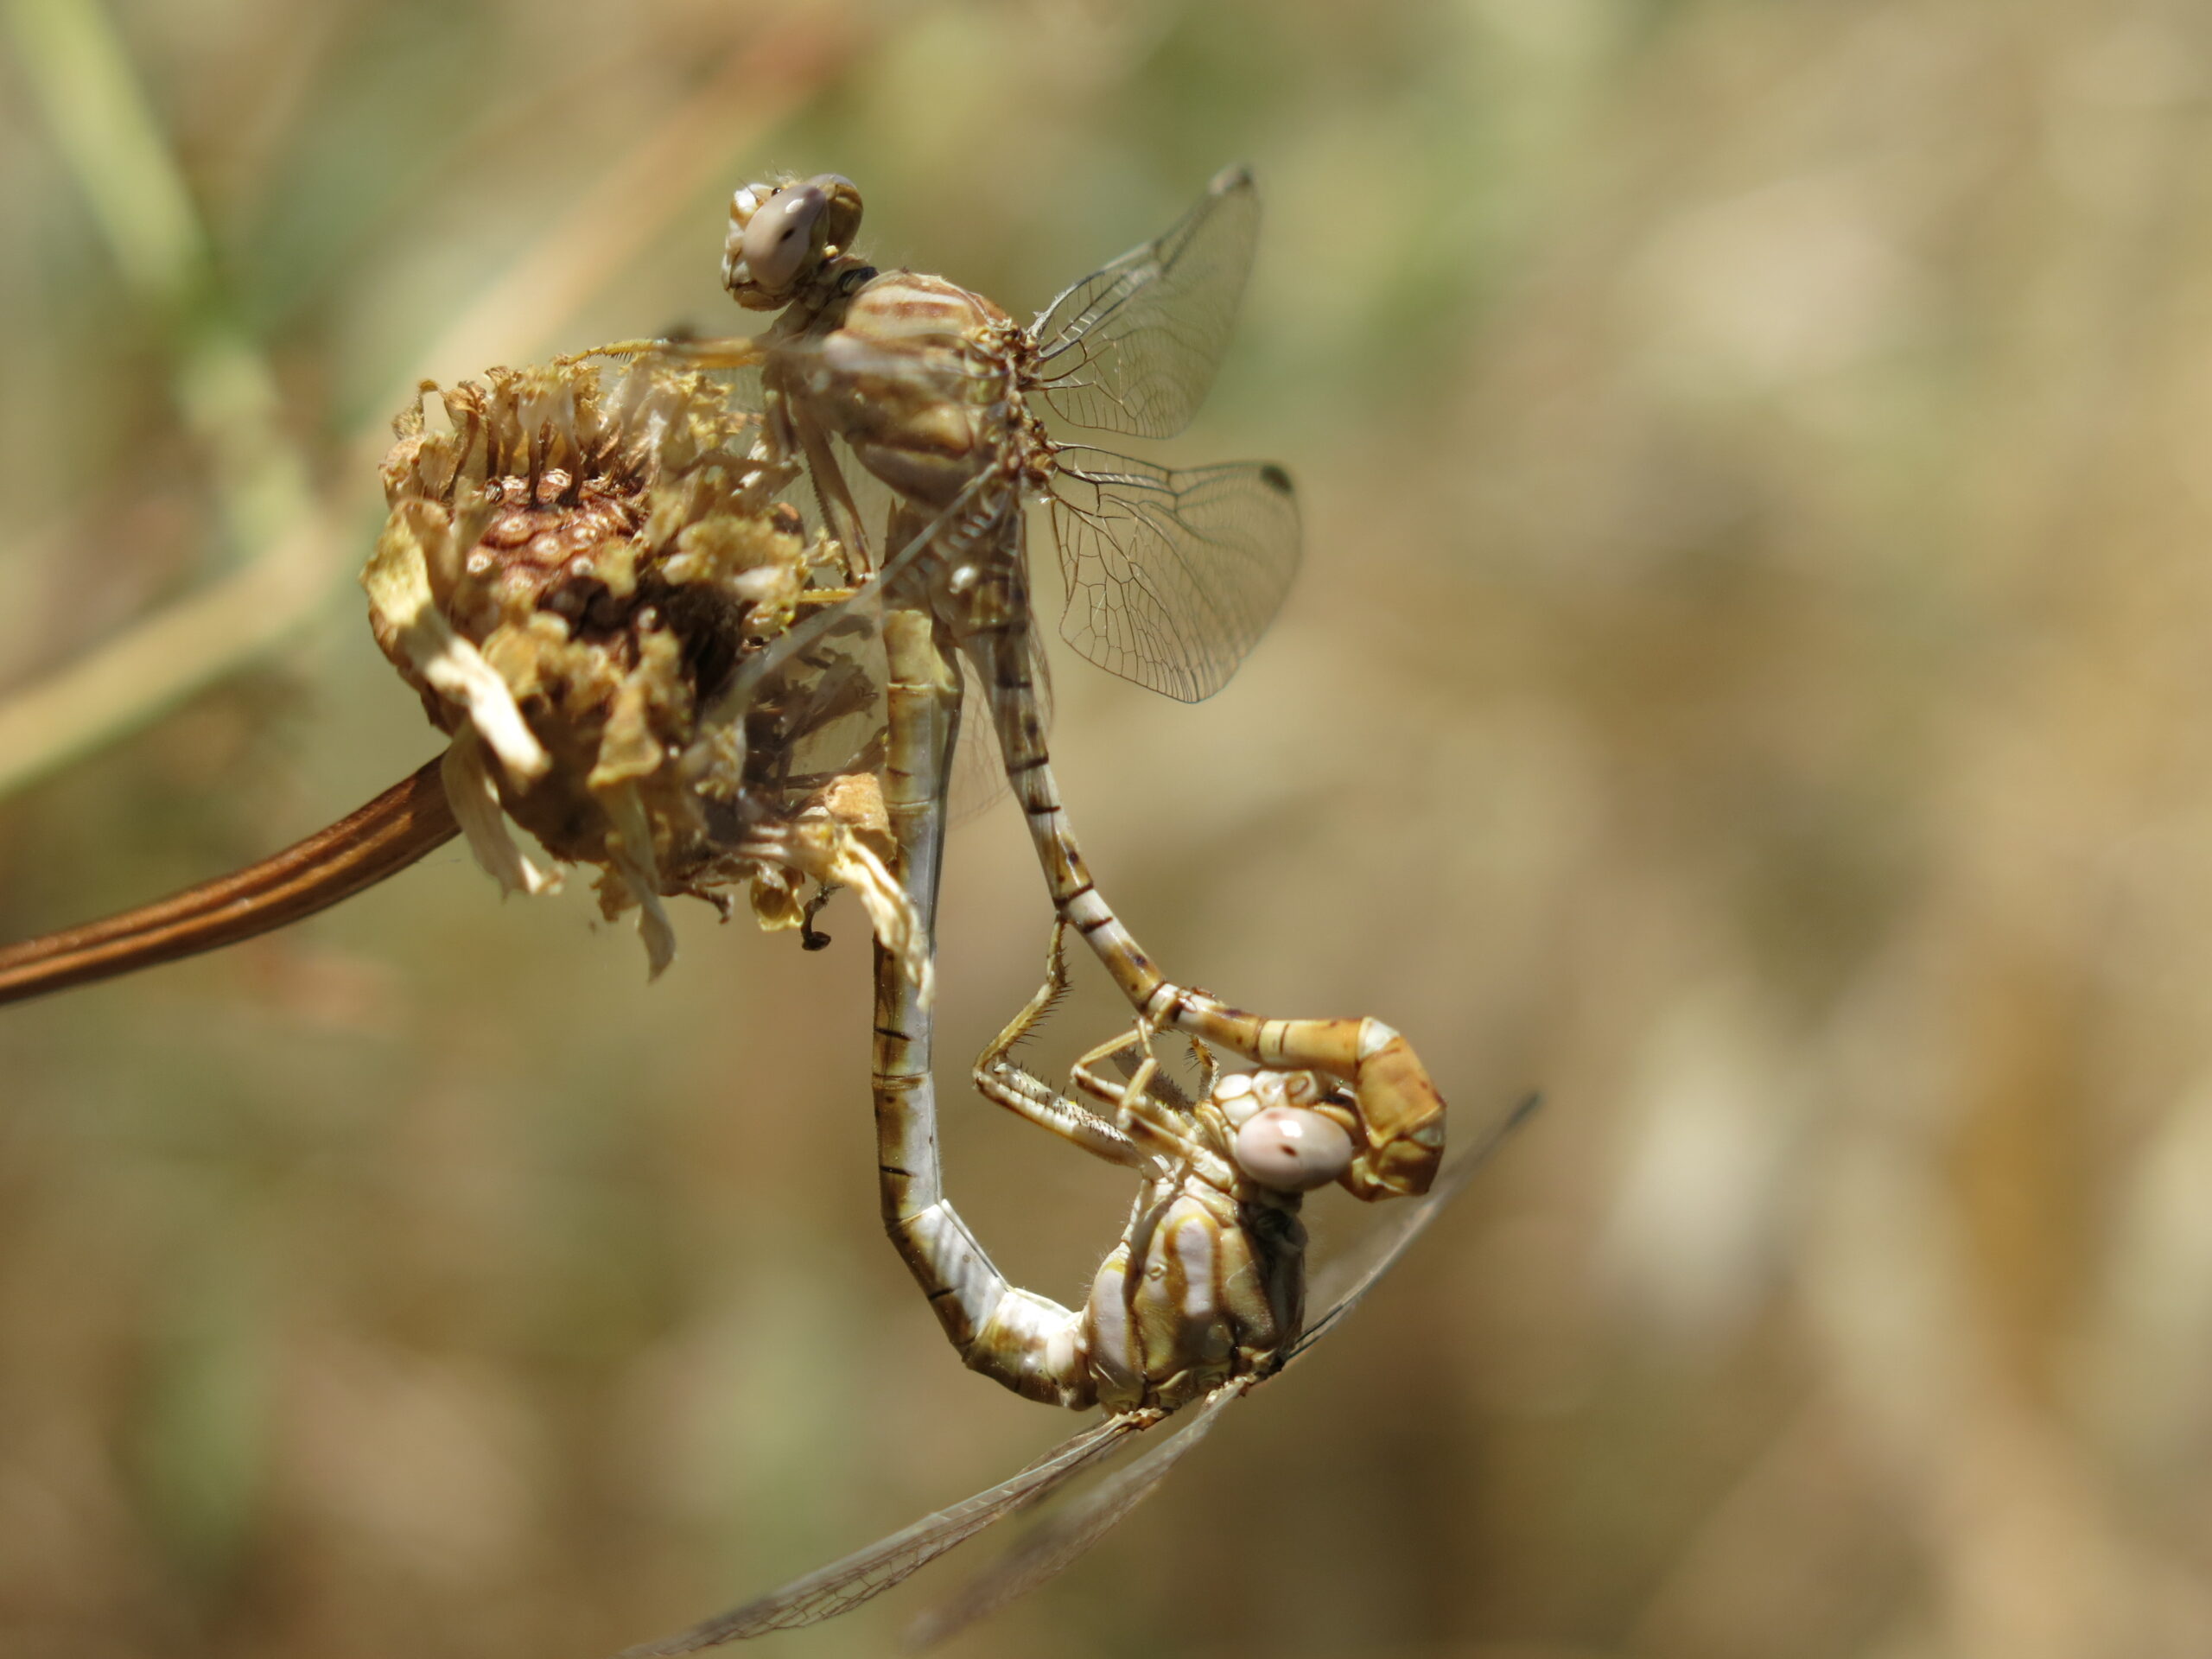 odonata, dragonfly, Spain, Andalusia, male, female, copula, reproduction